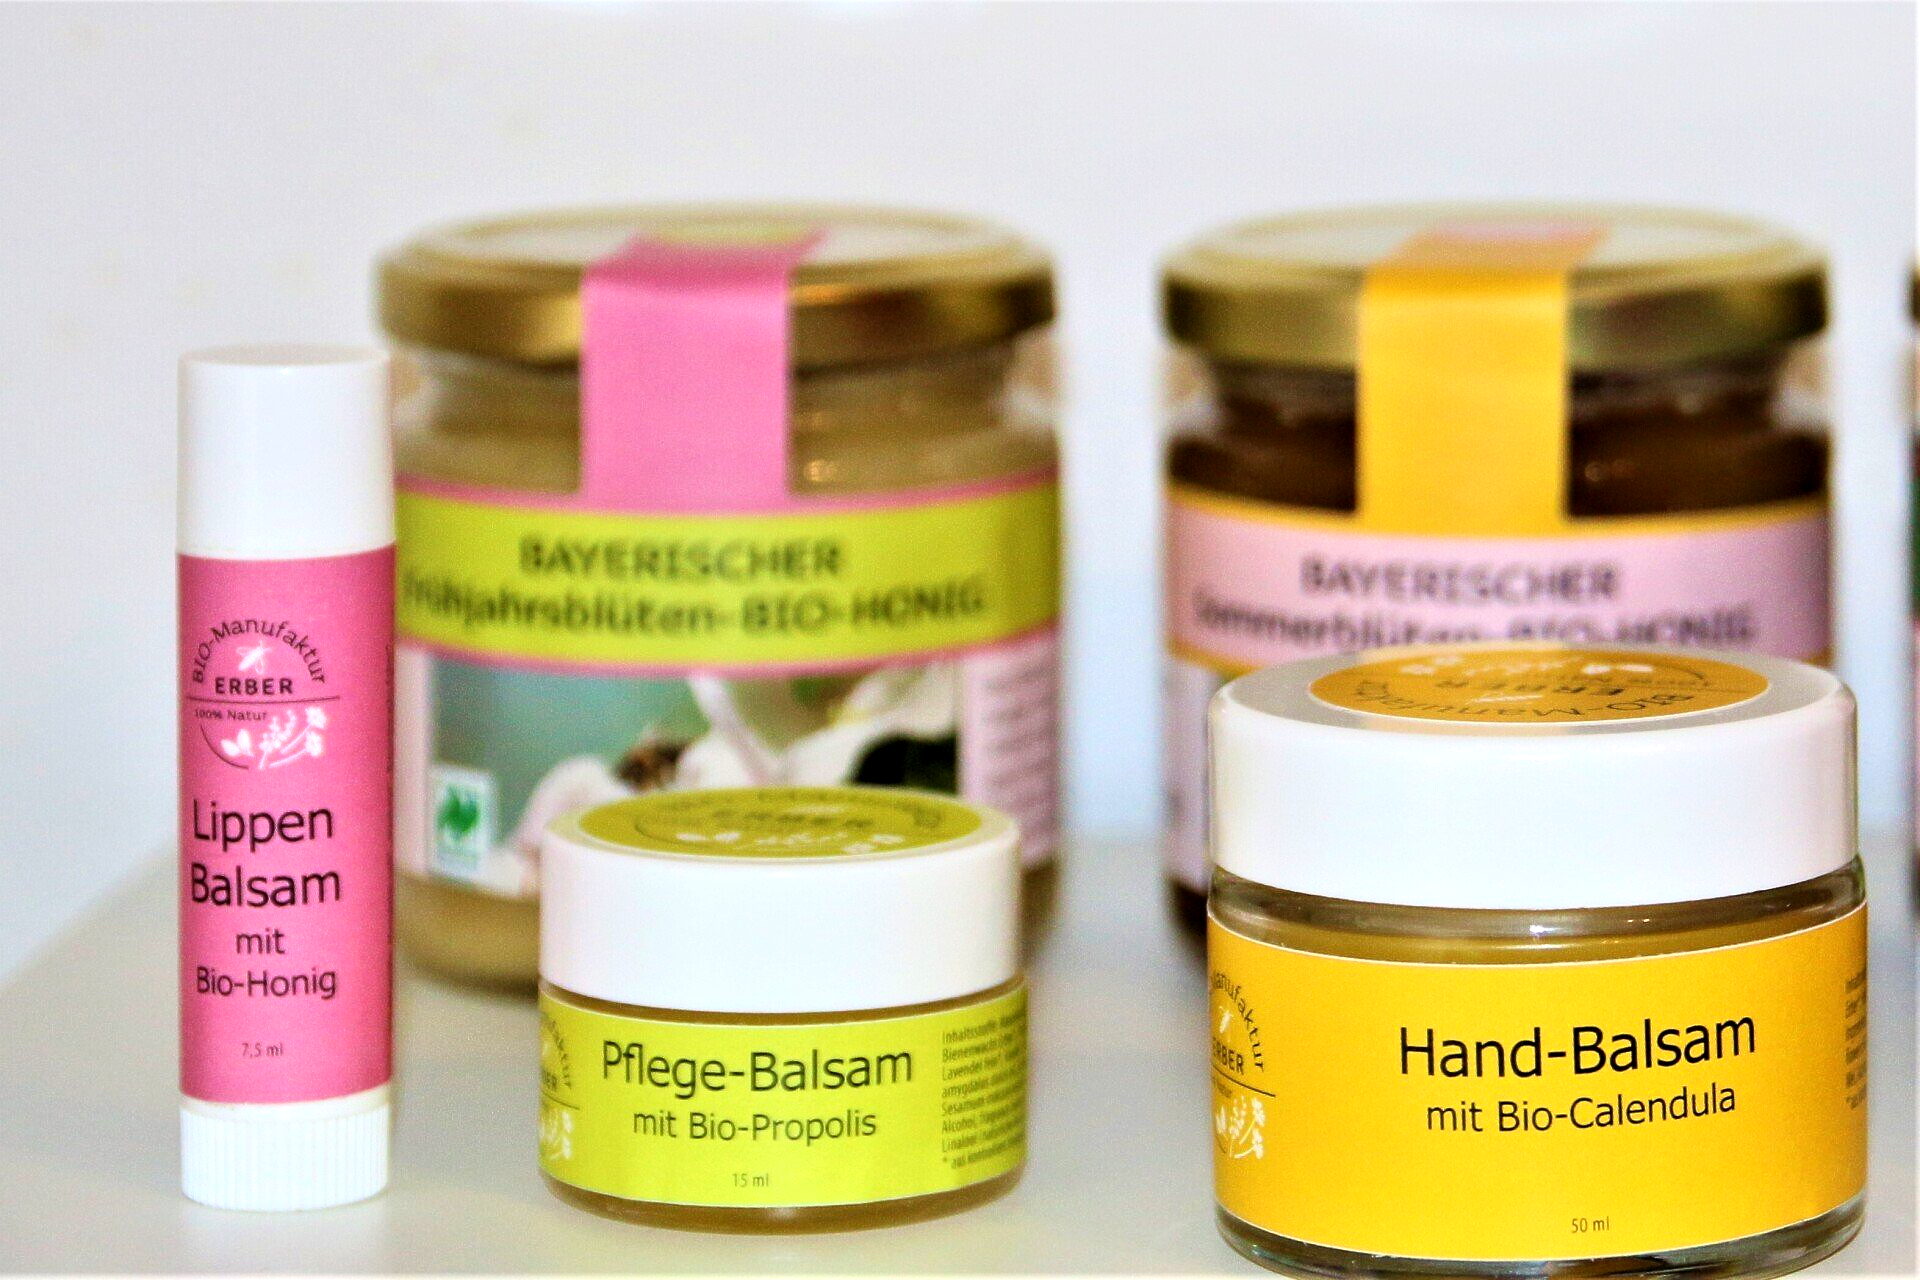 Balsame mit Bio-Bienenwachs, Bio-Honig, Bio-Propolis